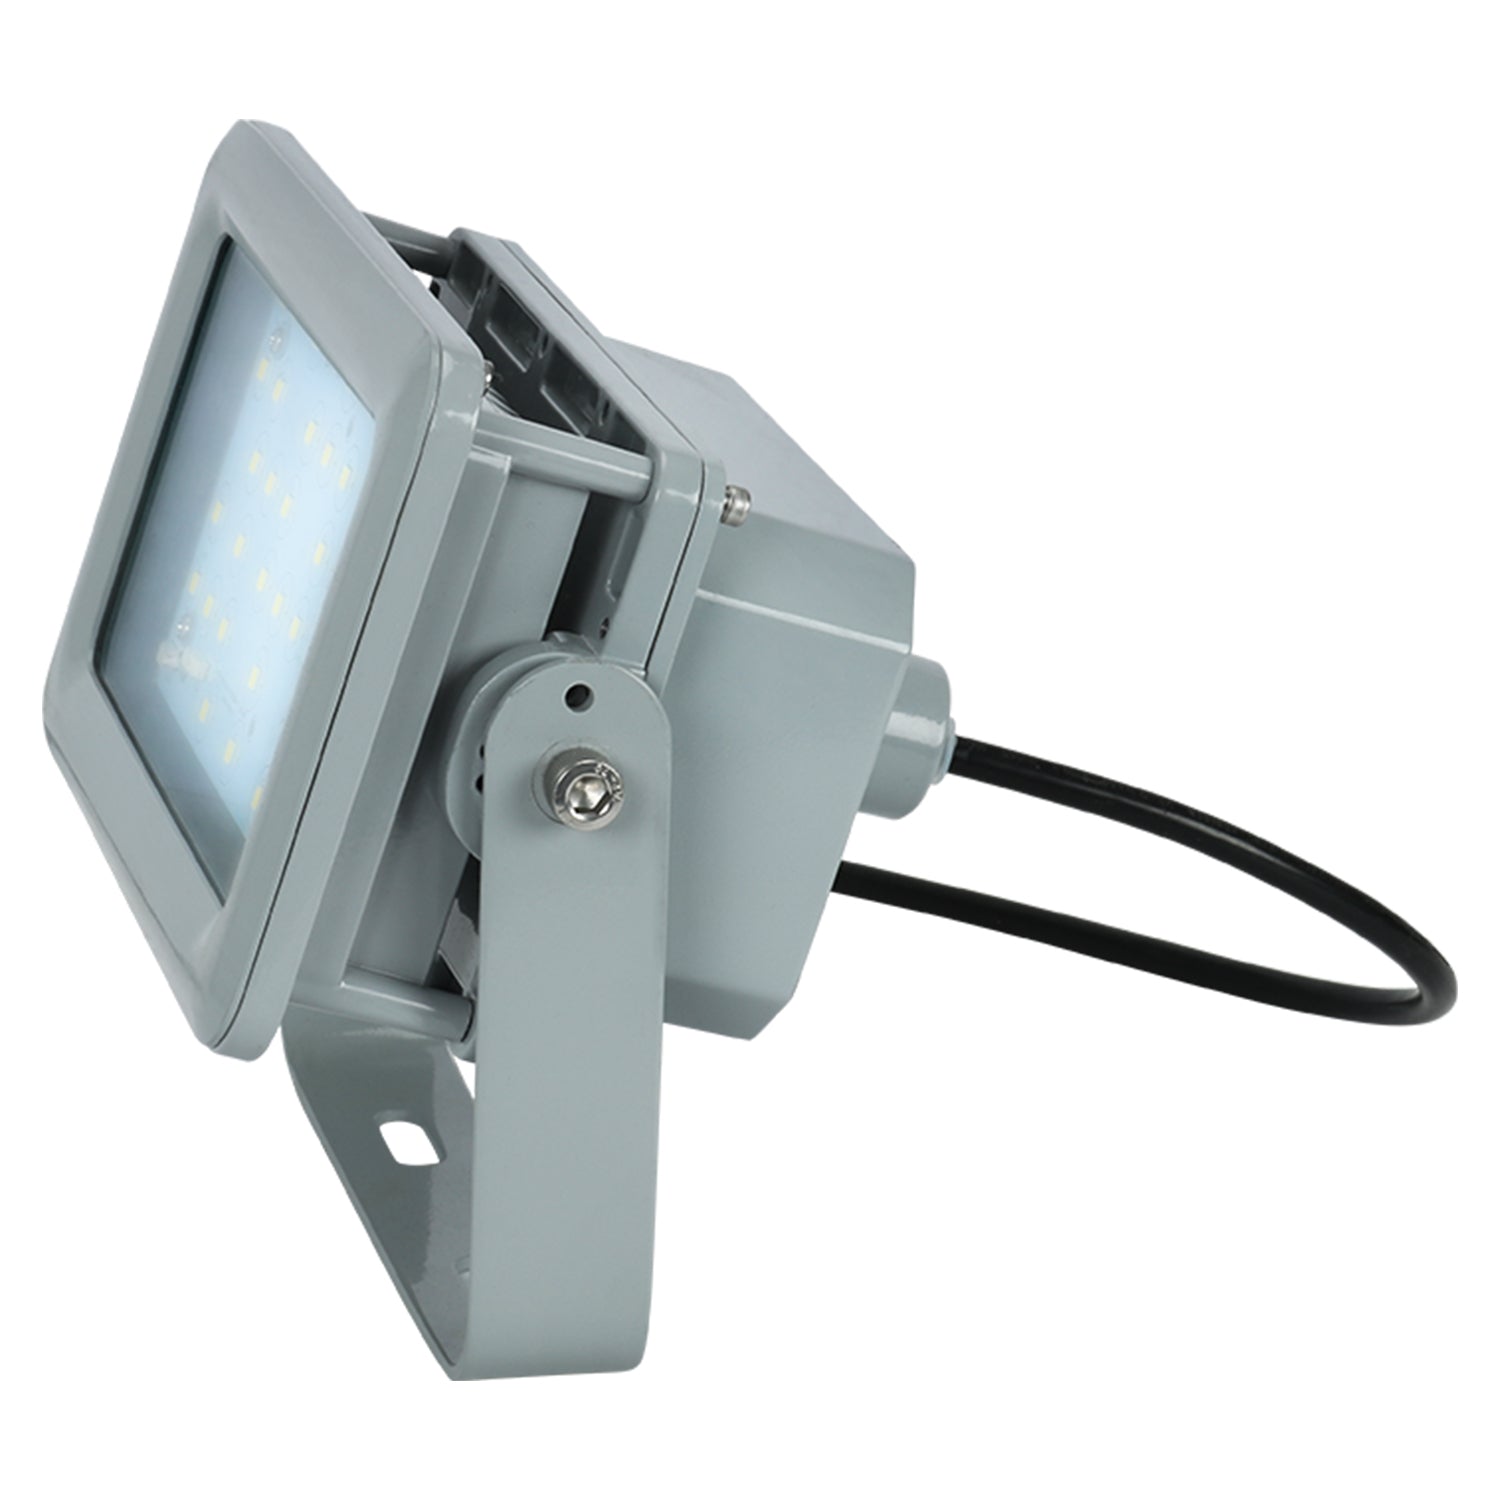 60 Watt LED Explosion Proof Flood Light, A Series, Non Dimmable, 5000K, 8400LM, AC100-277V, IP66, Hazardous Location Lighting Fixtures